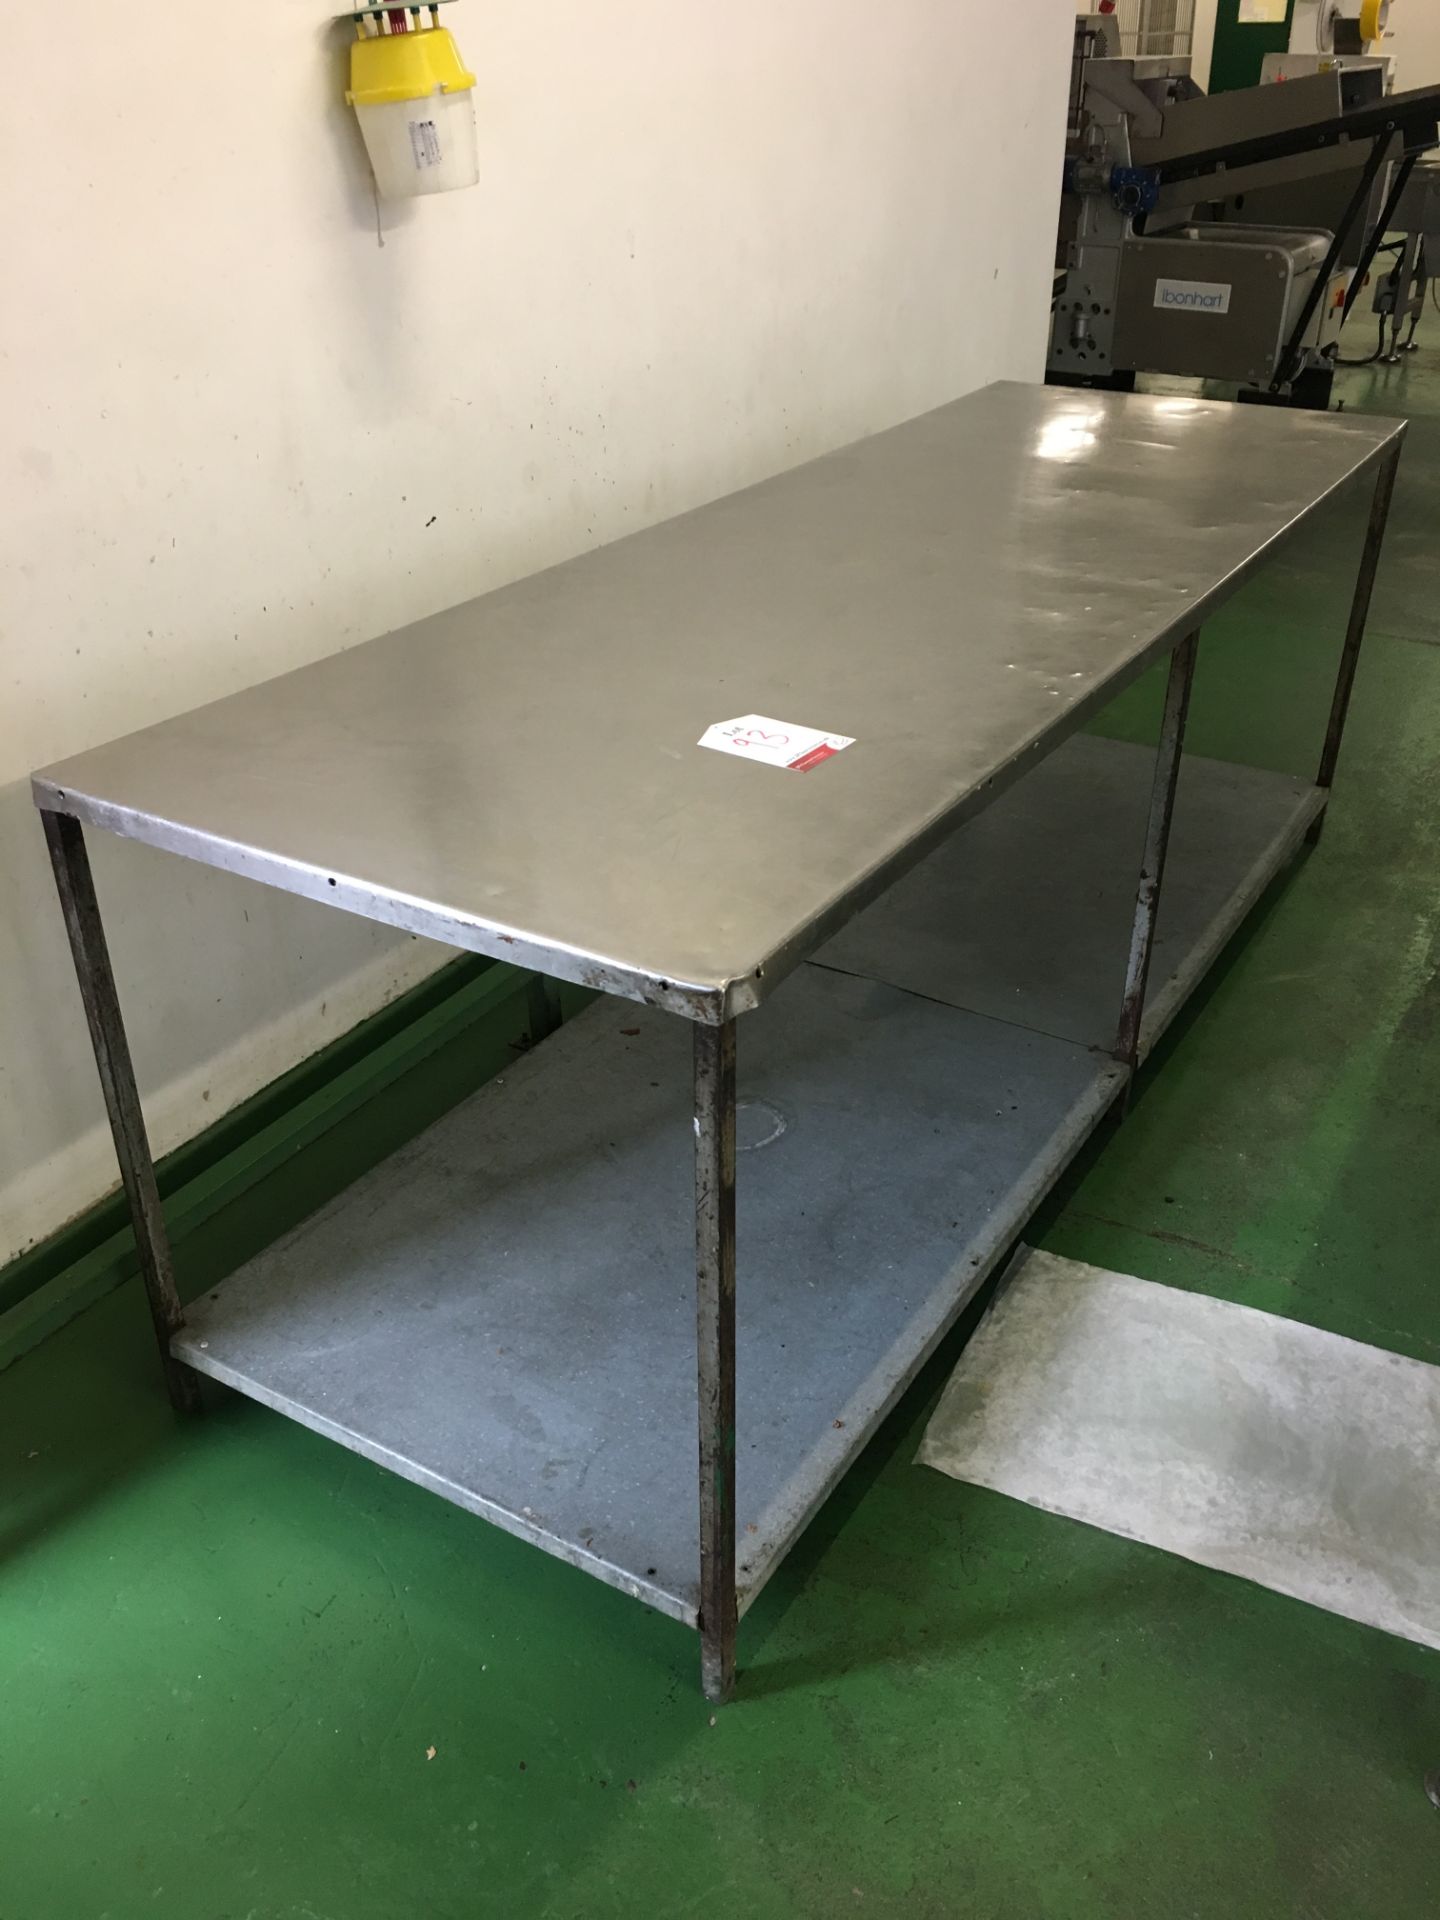 Stainless Steel Preparation Table w/ Undershelf - 240cm x 80cm x 85cm - Image 2 of 2